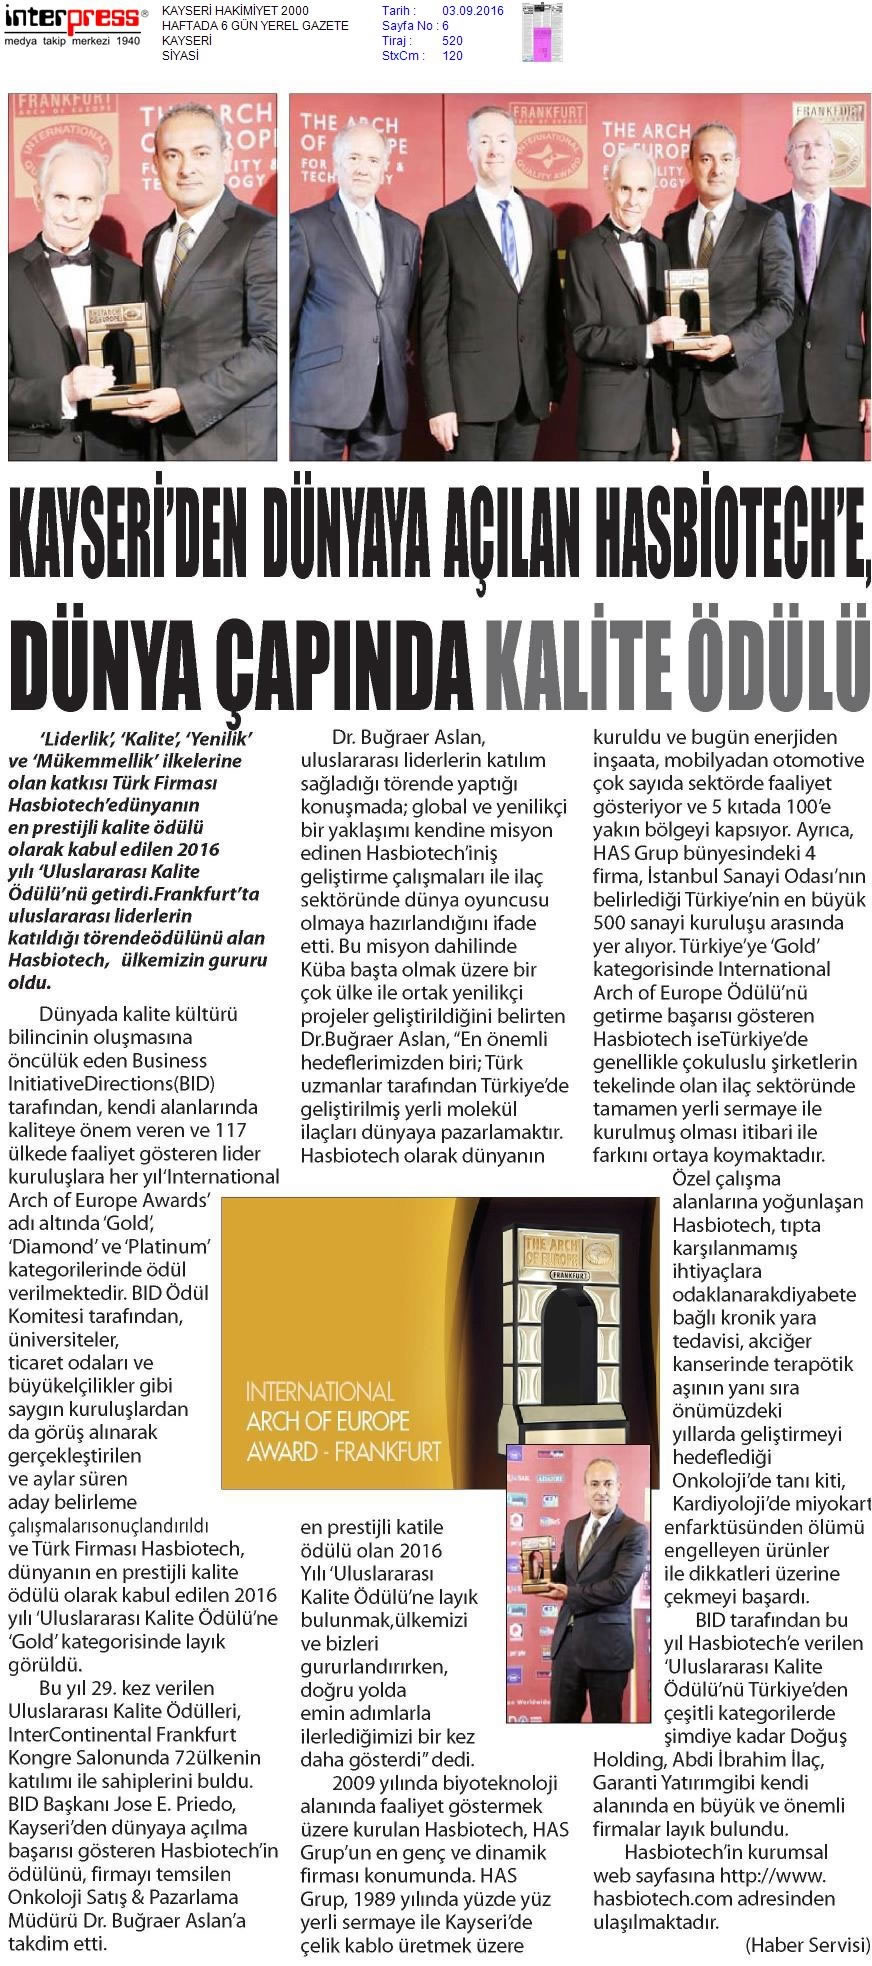 Kayseri Hakimiyet 2000 Gazetesi